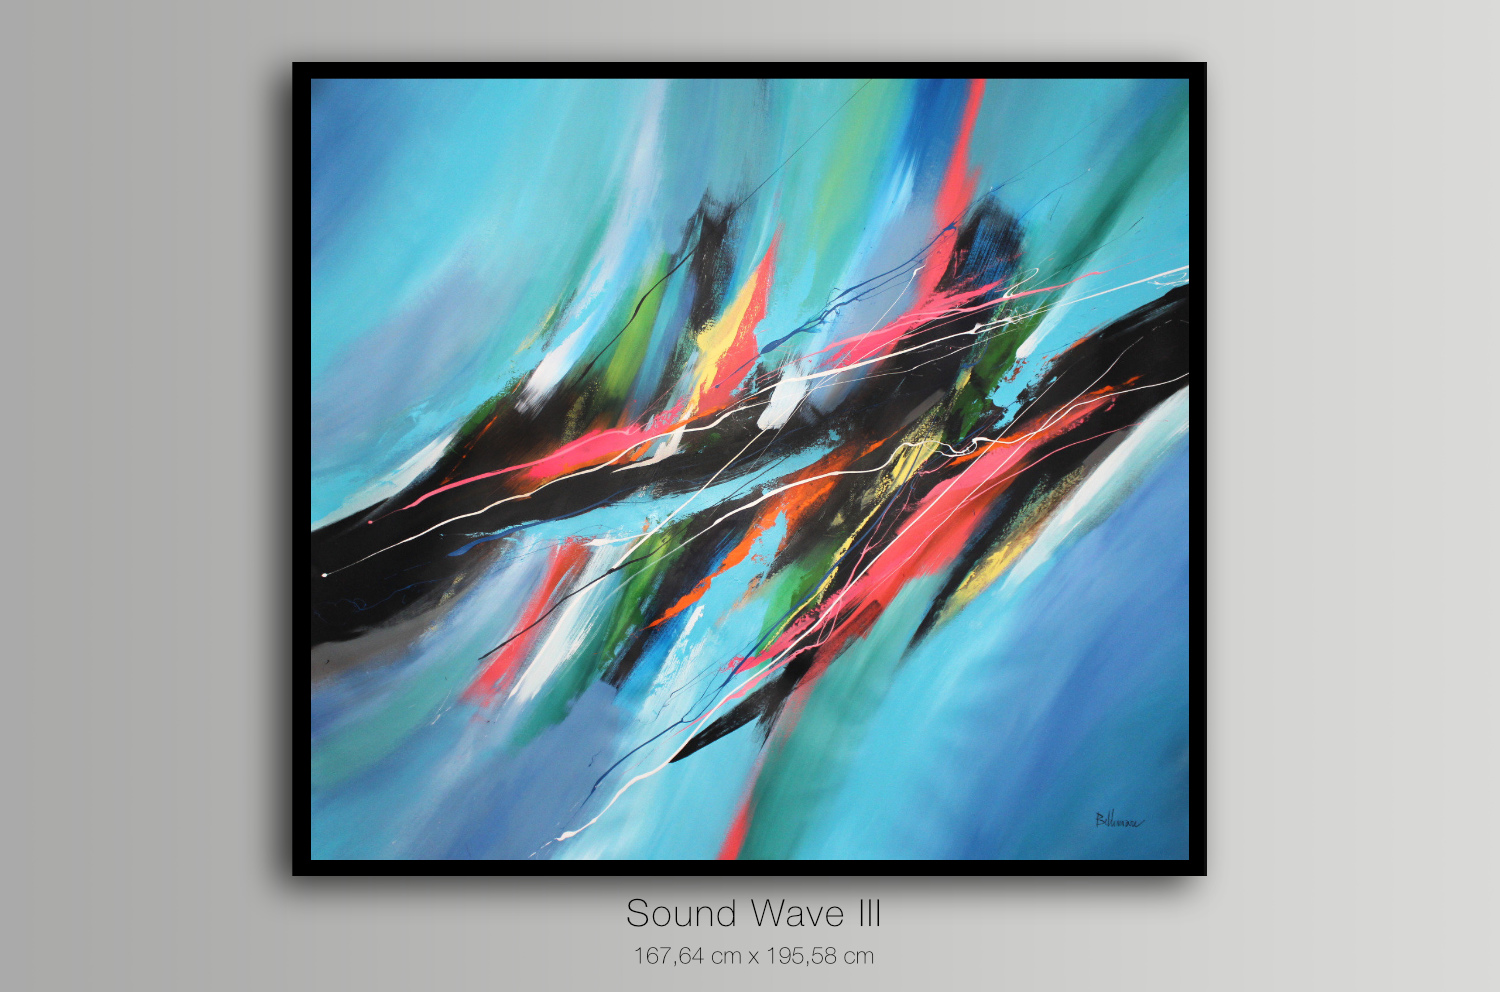 Sound Wave III - Featured